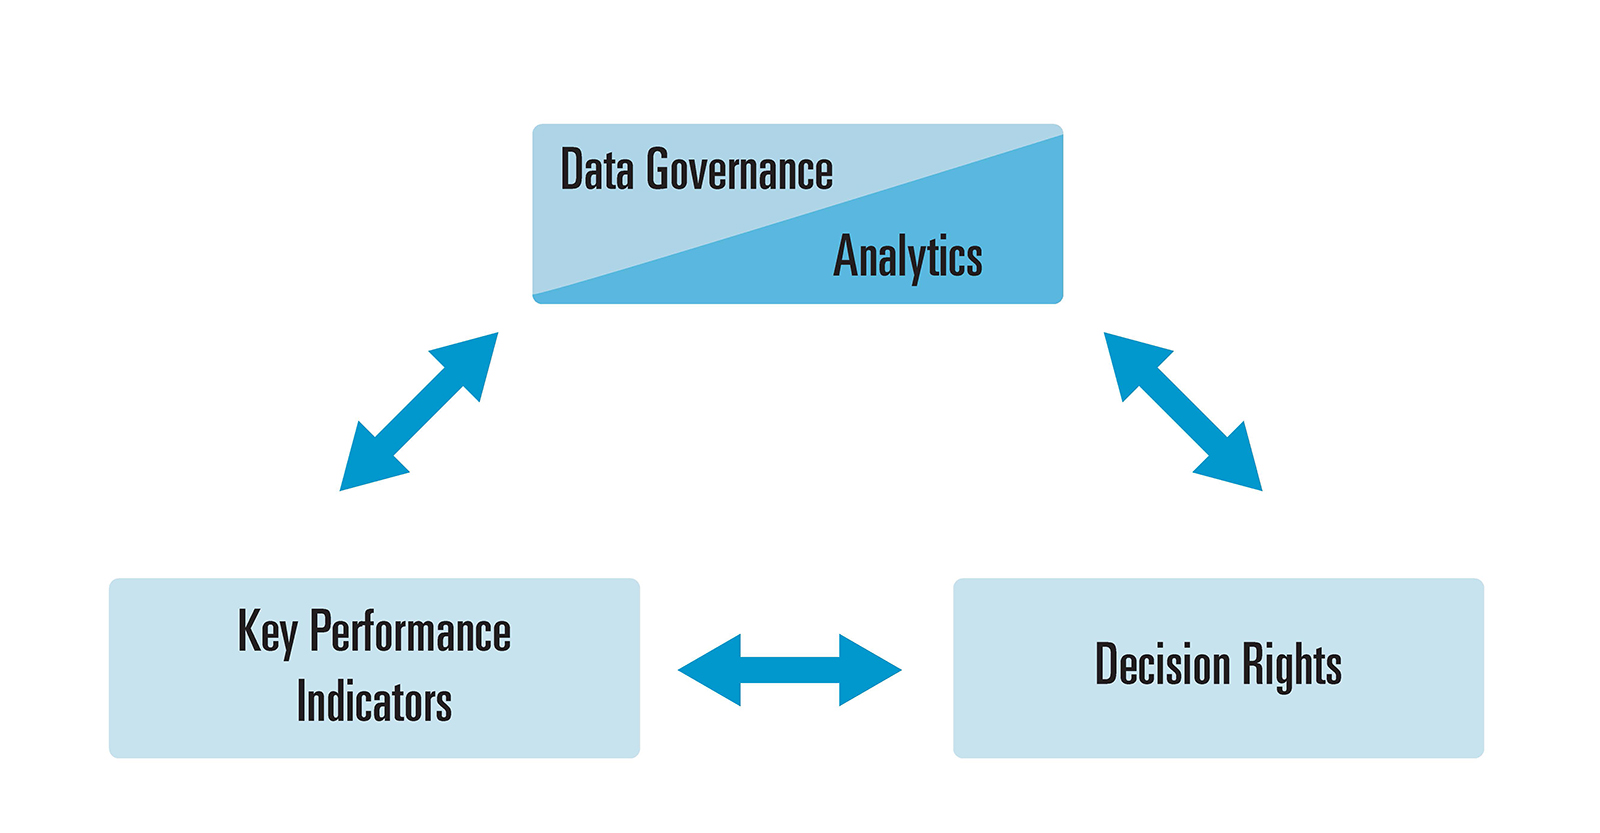 Data Governance Extends to Analytics